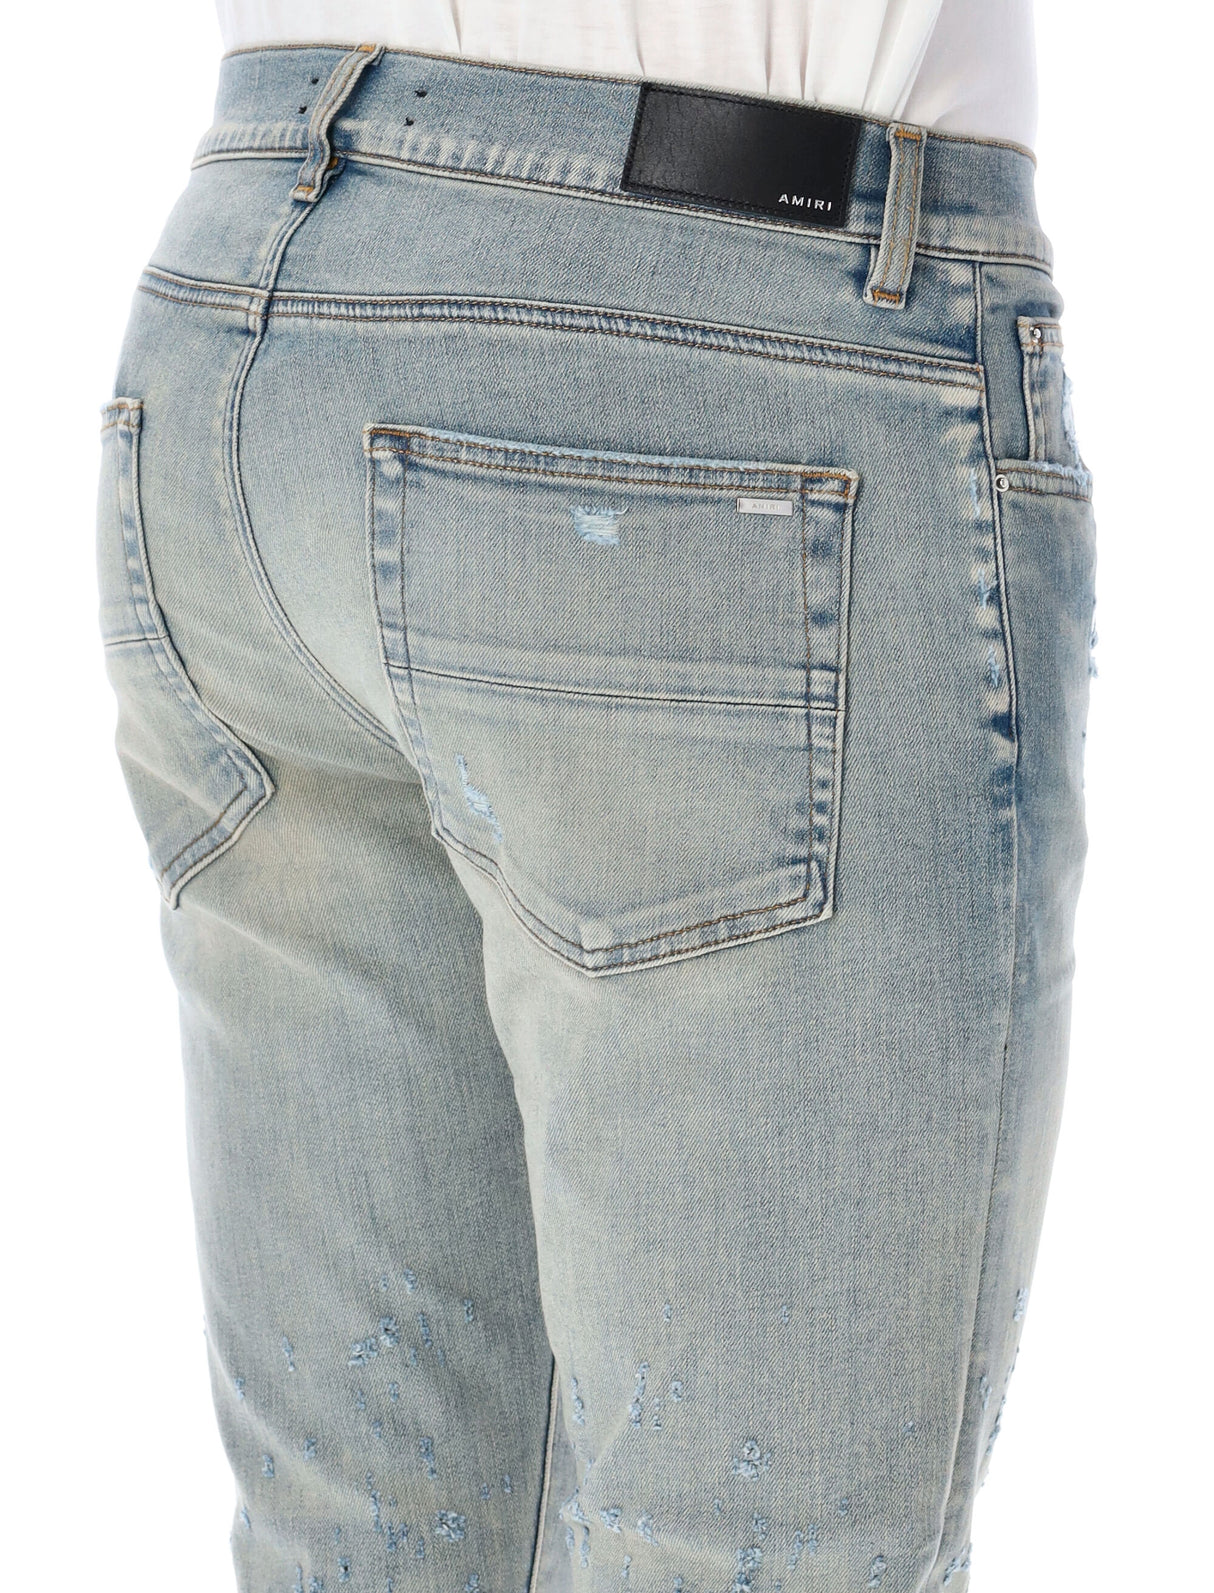 AMIRI Antique Indigo Shotgun Skinny Jeans for Men - Cotton Blend, Distressed, Skinny Fit